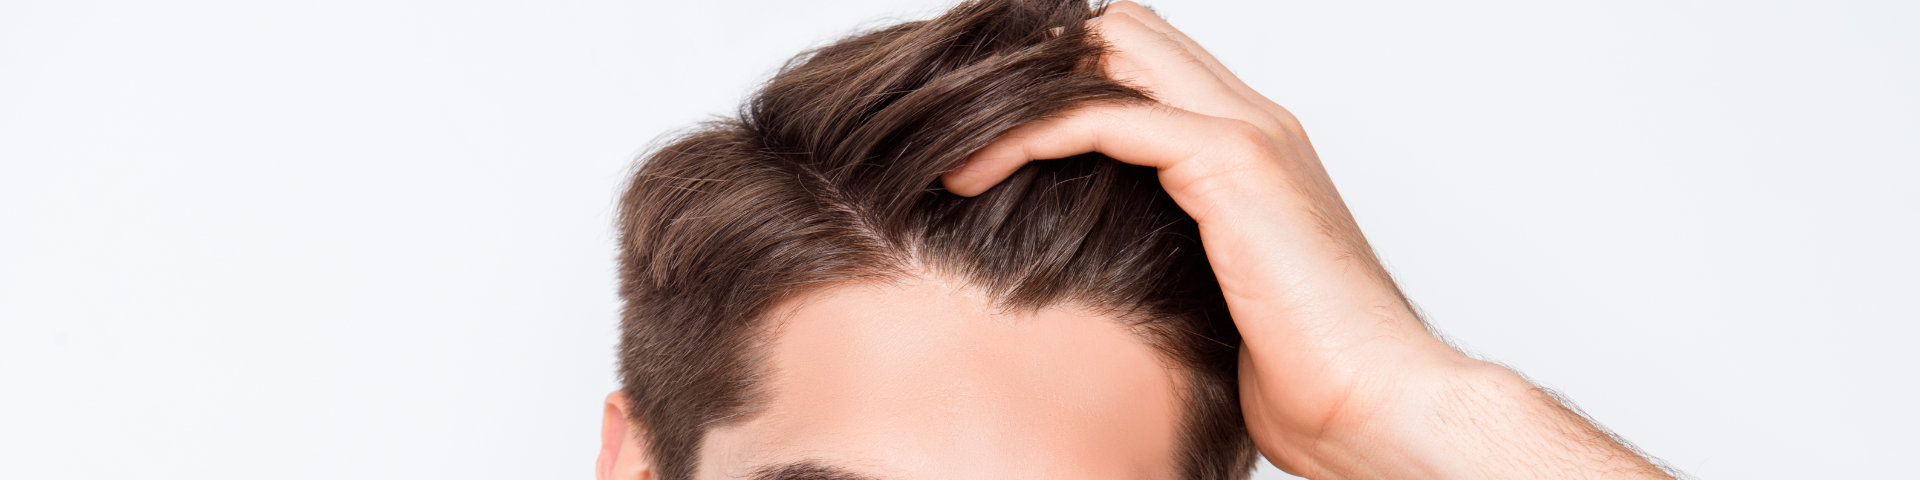 7 Most Common Causes of Hair Loss Pasadena, CA